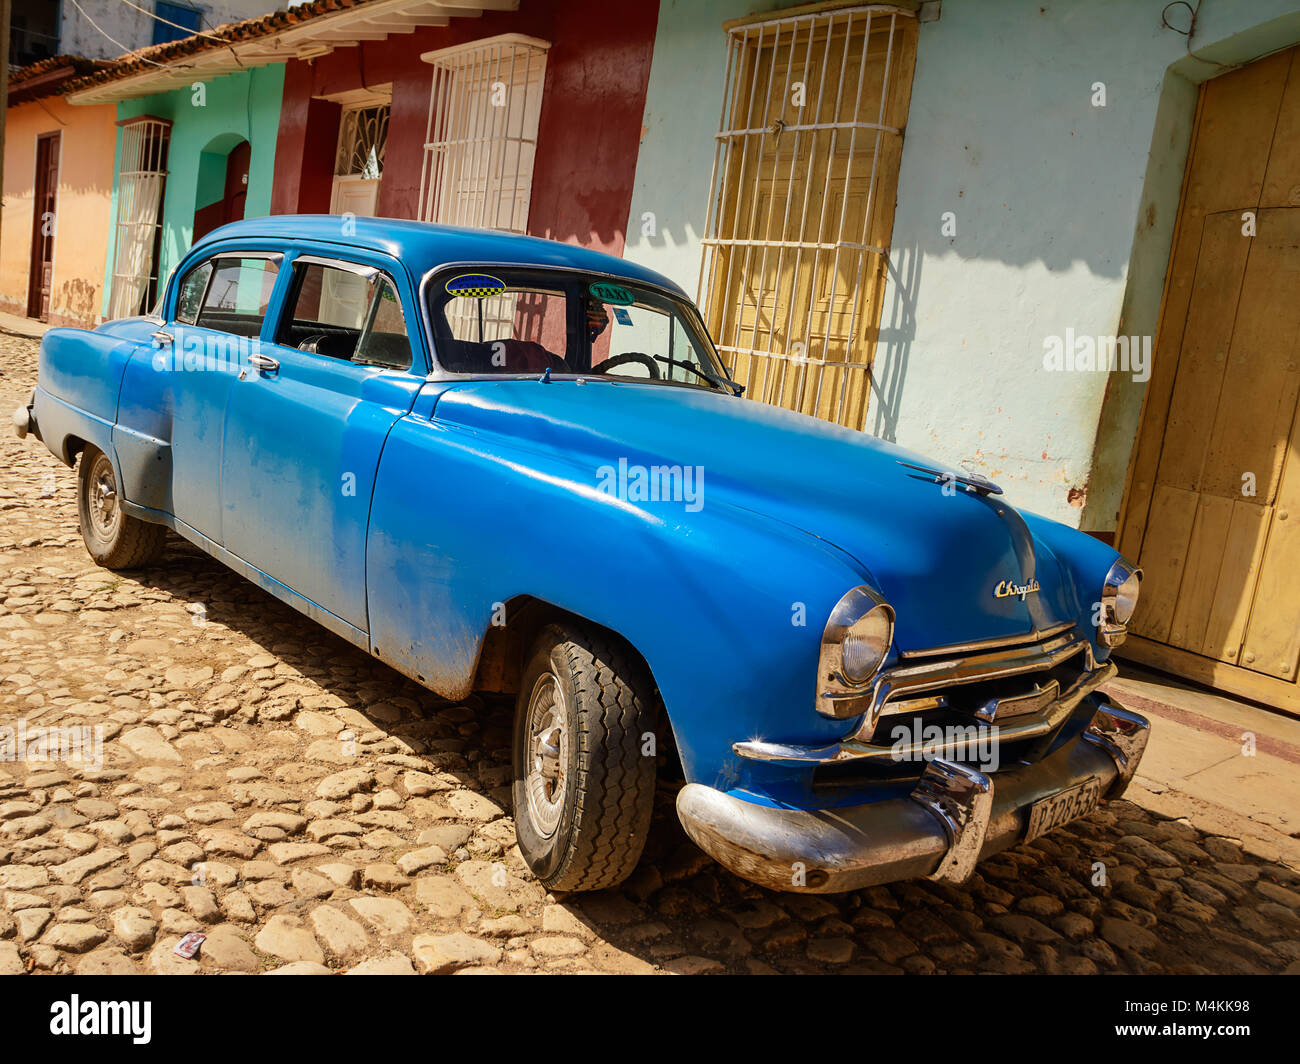 Trinidad, Cuba - December 8, 2017: Old American car parked on the Trinidad street Stock Photo